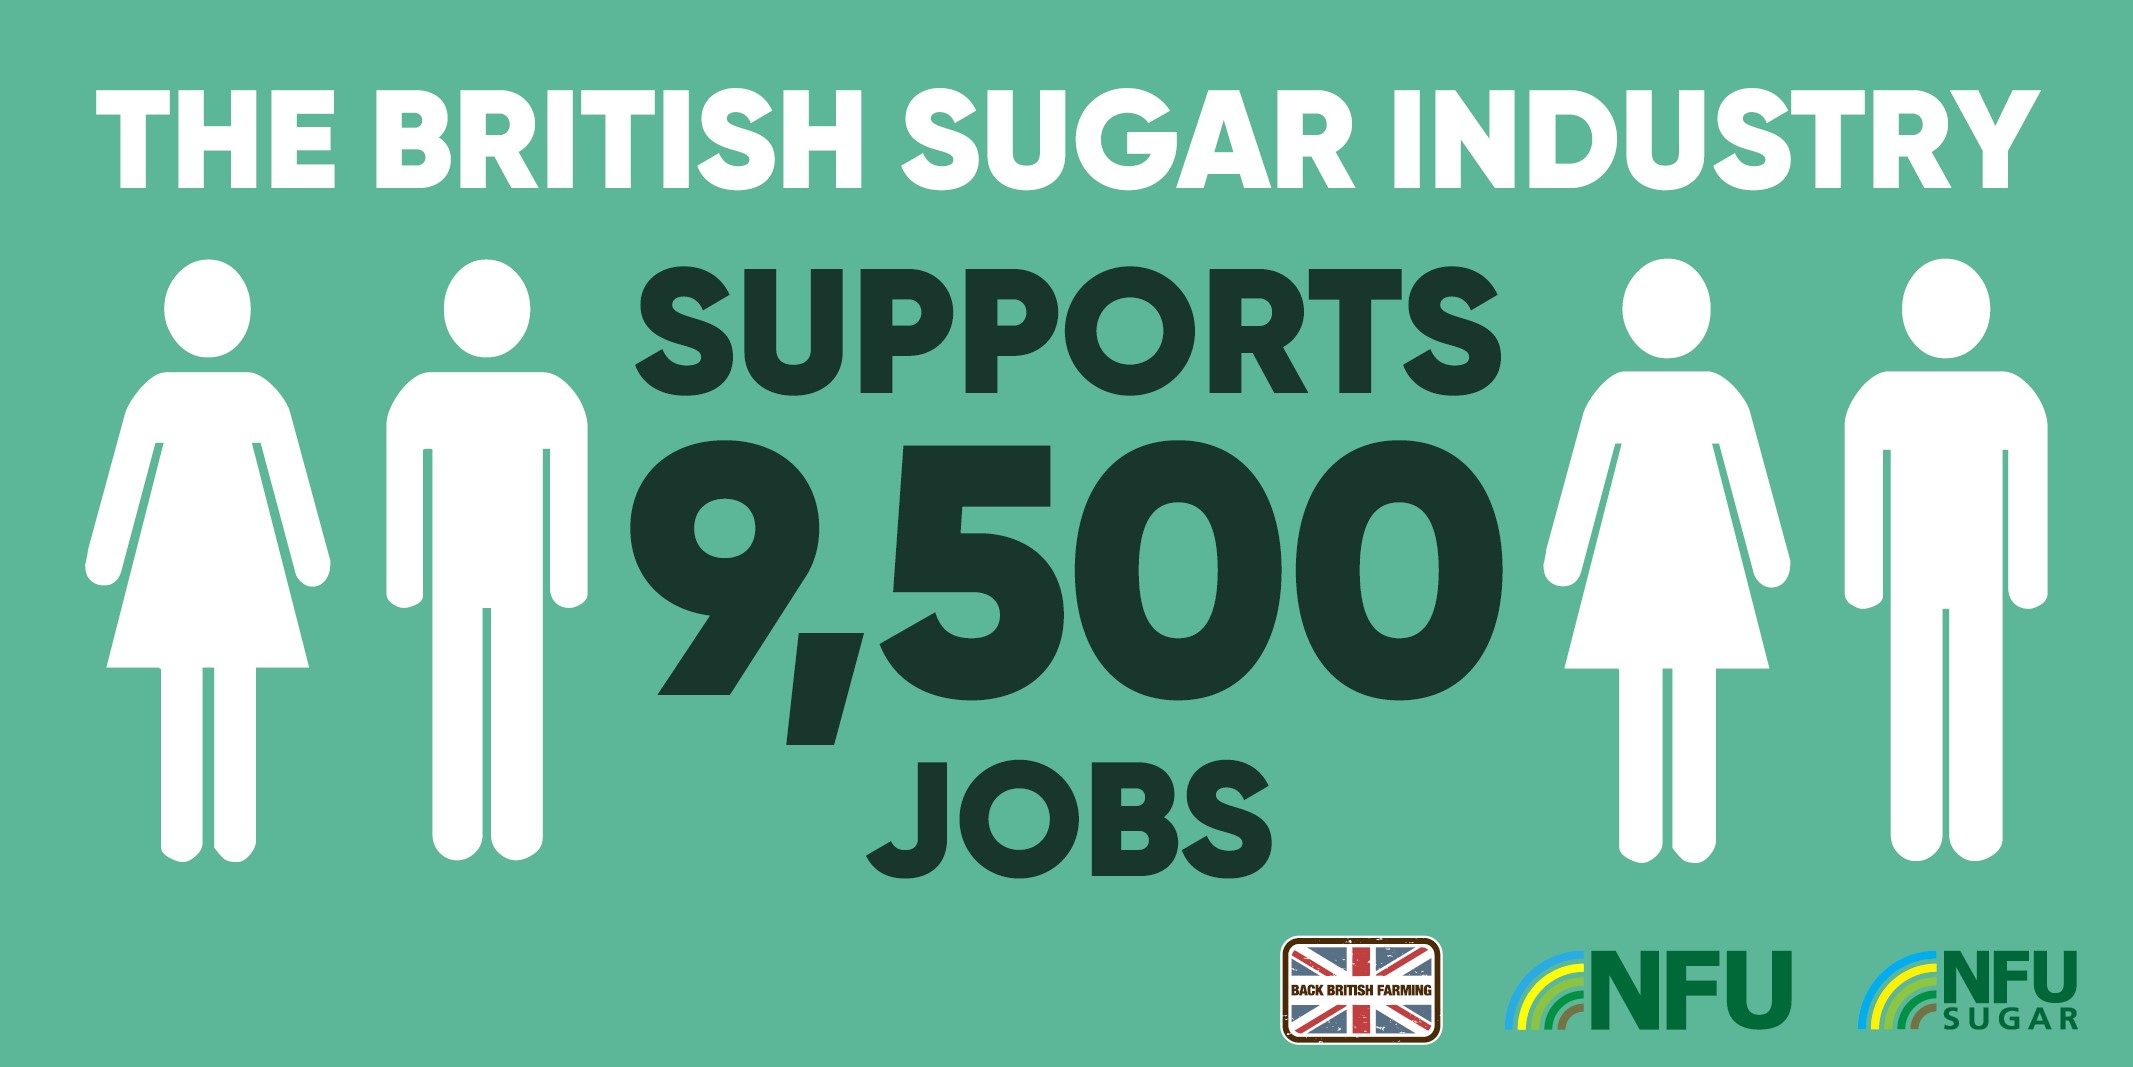 Nfu Sugar infographic Twitter 9500 jobs